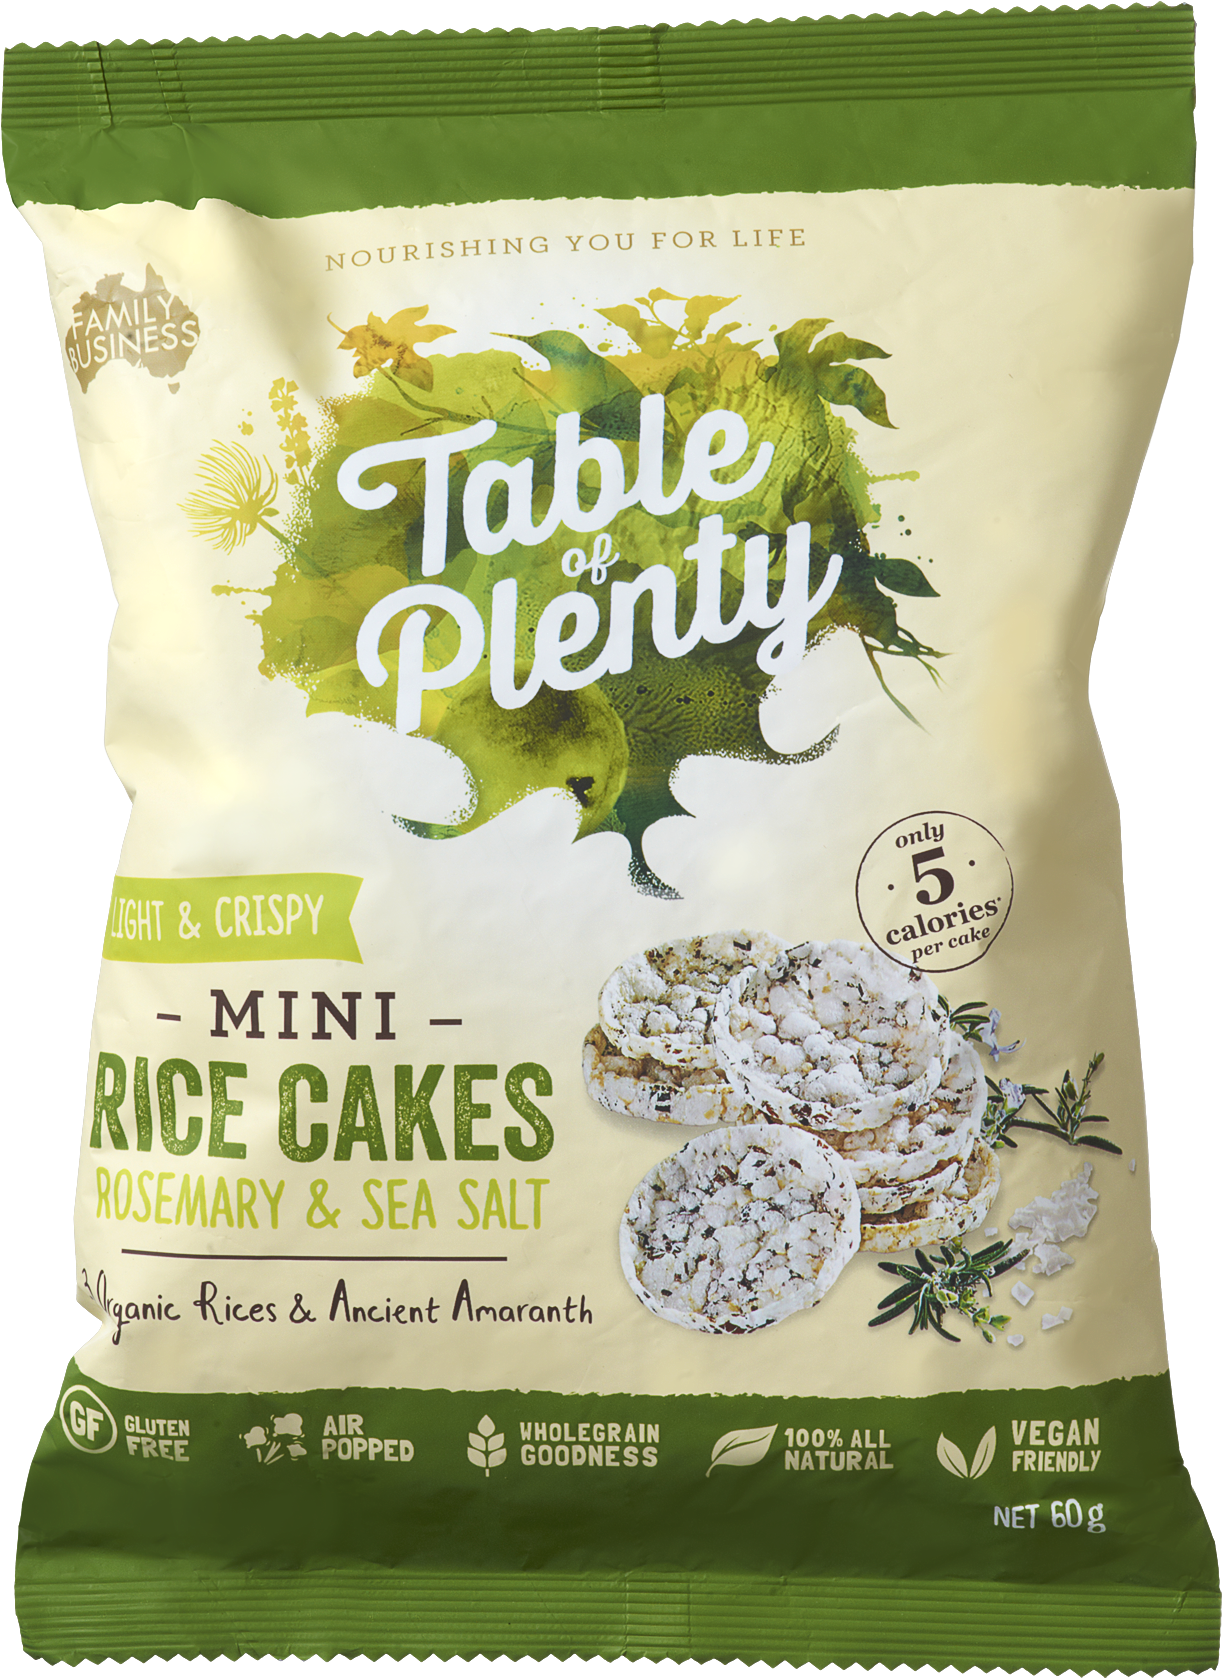 Tableof Plenty Mini Rice Cakes Packaging PNG